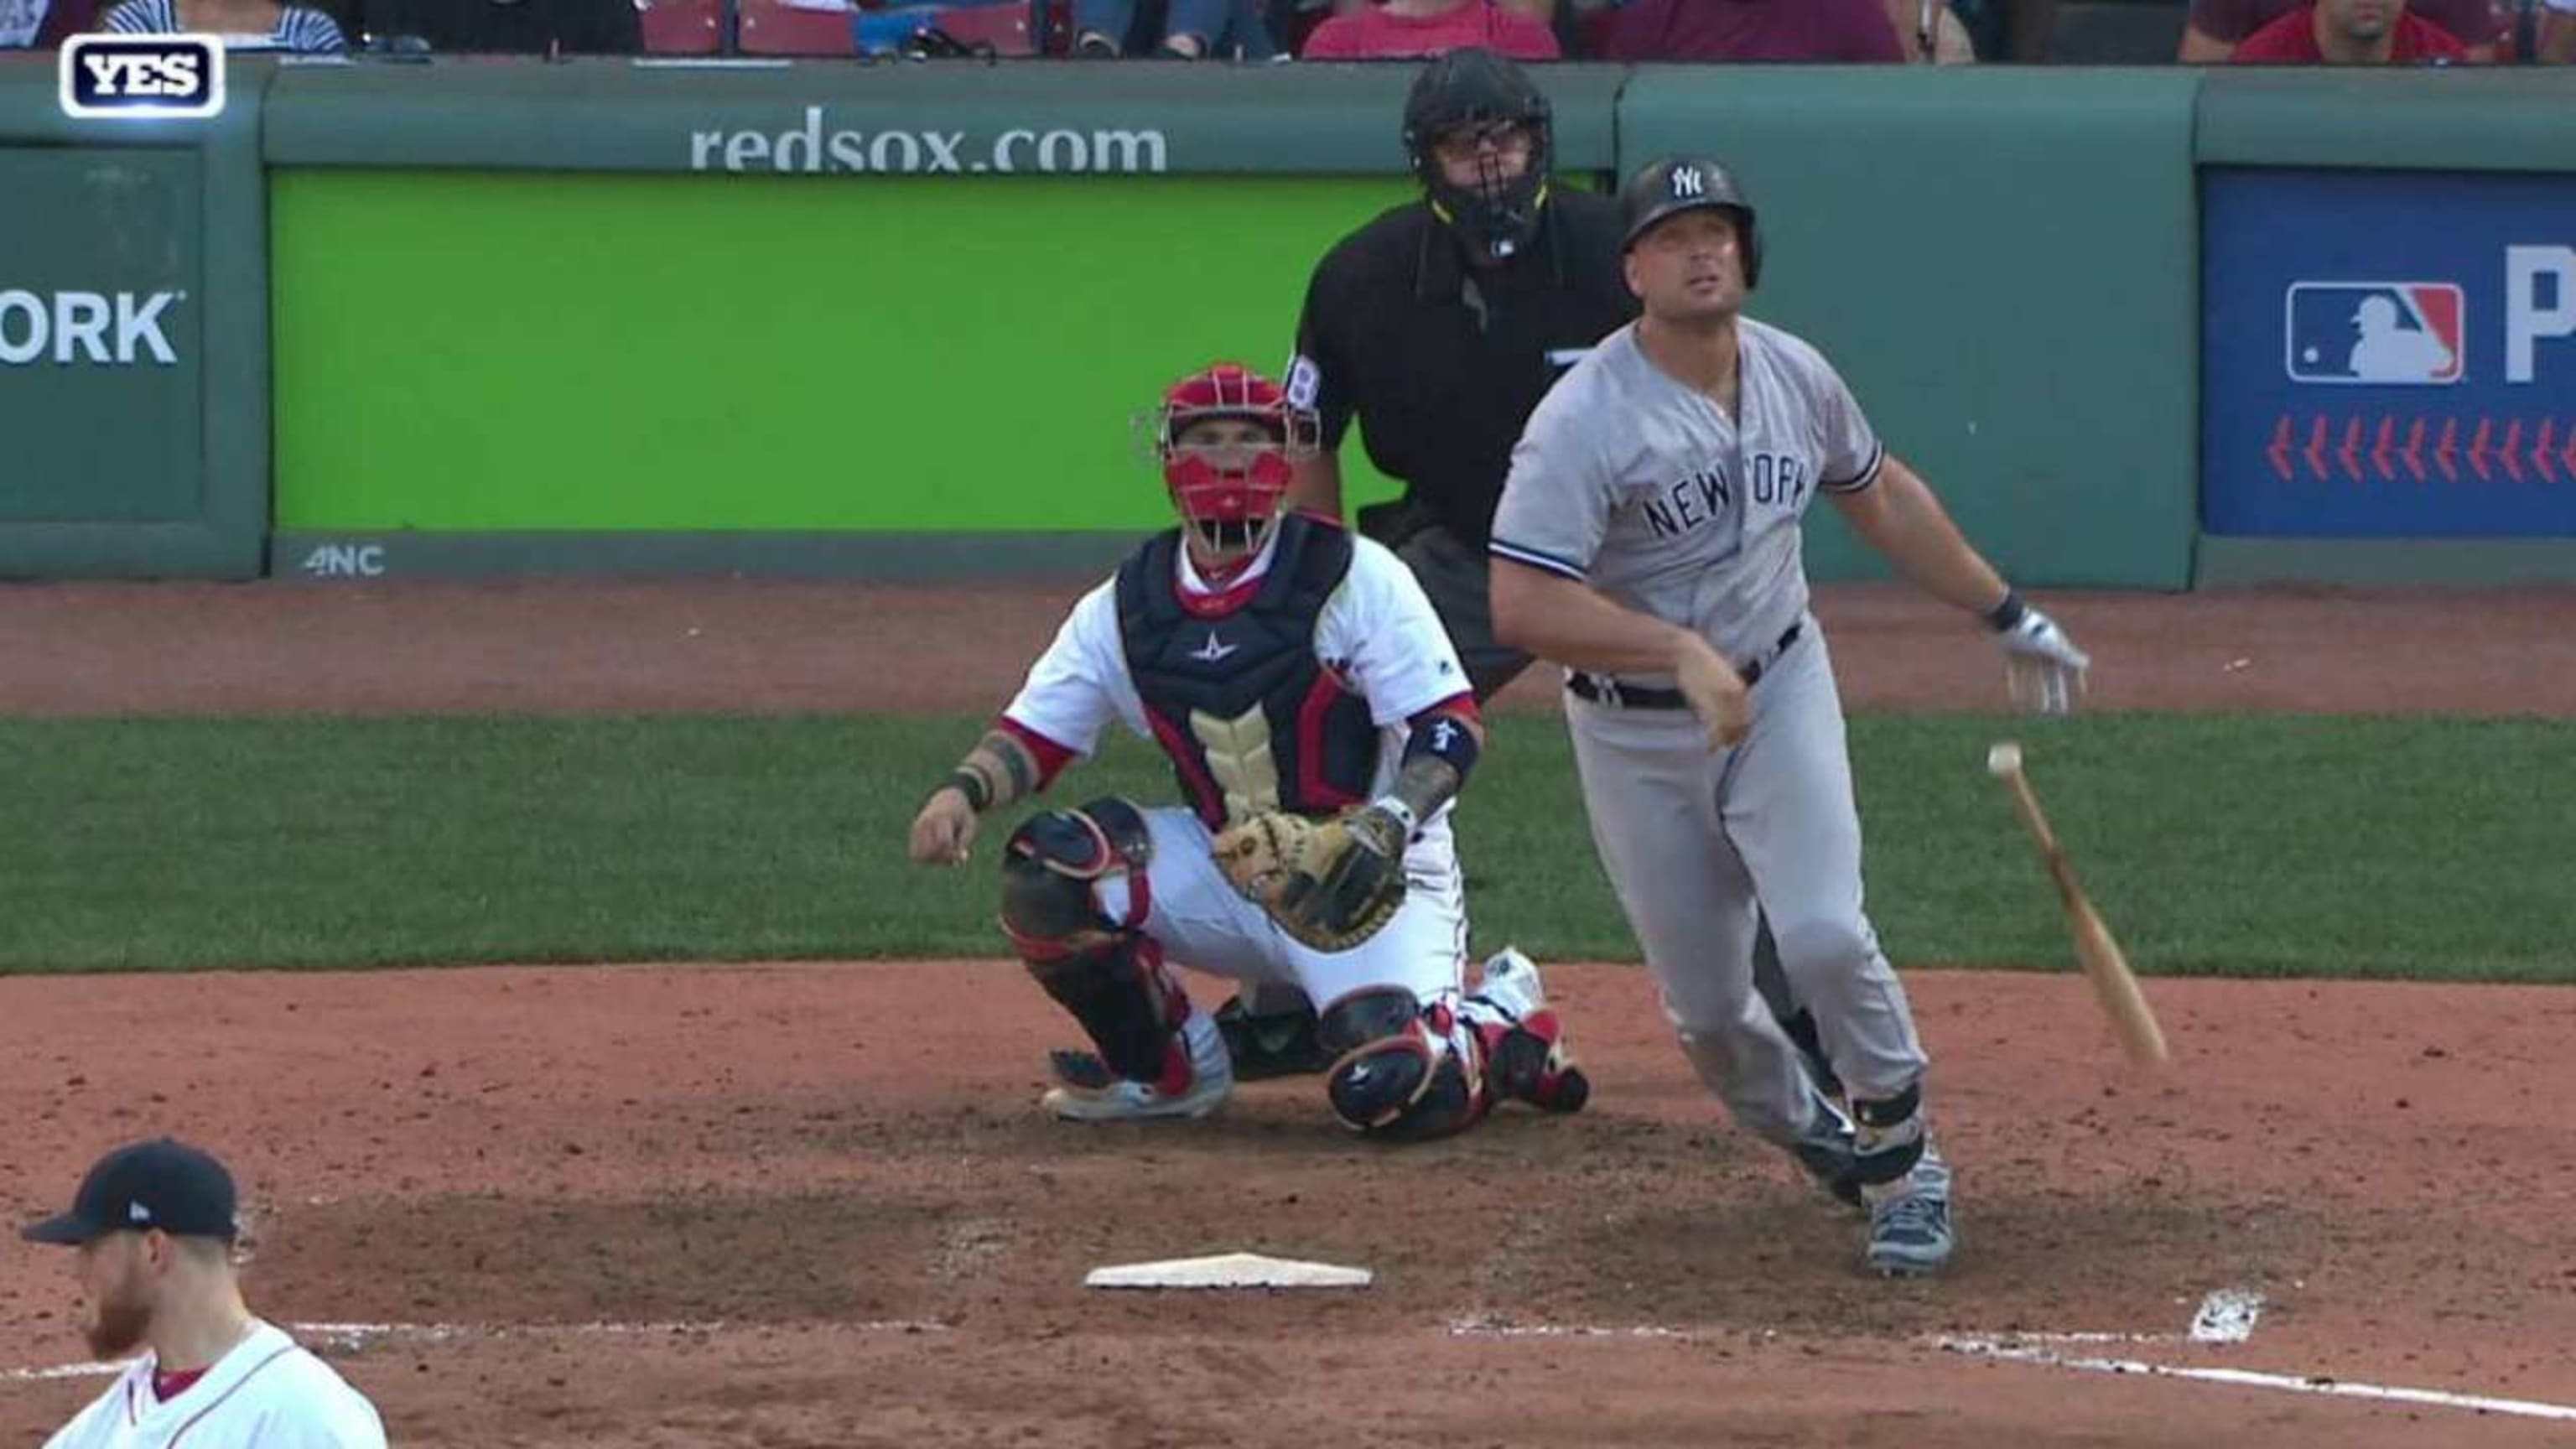 BSJ Game Report: Red Sox 10, Rangers 6 - Kiké Hernández sparks 6-run  inning, Sox take series over Texas